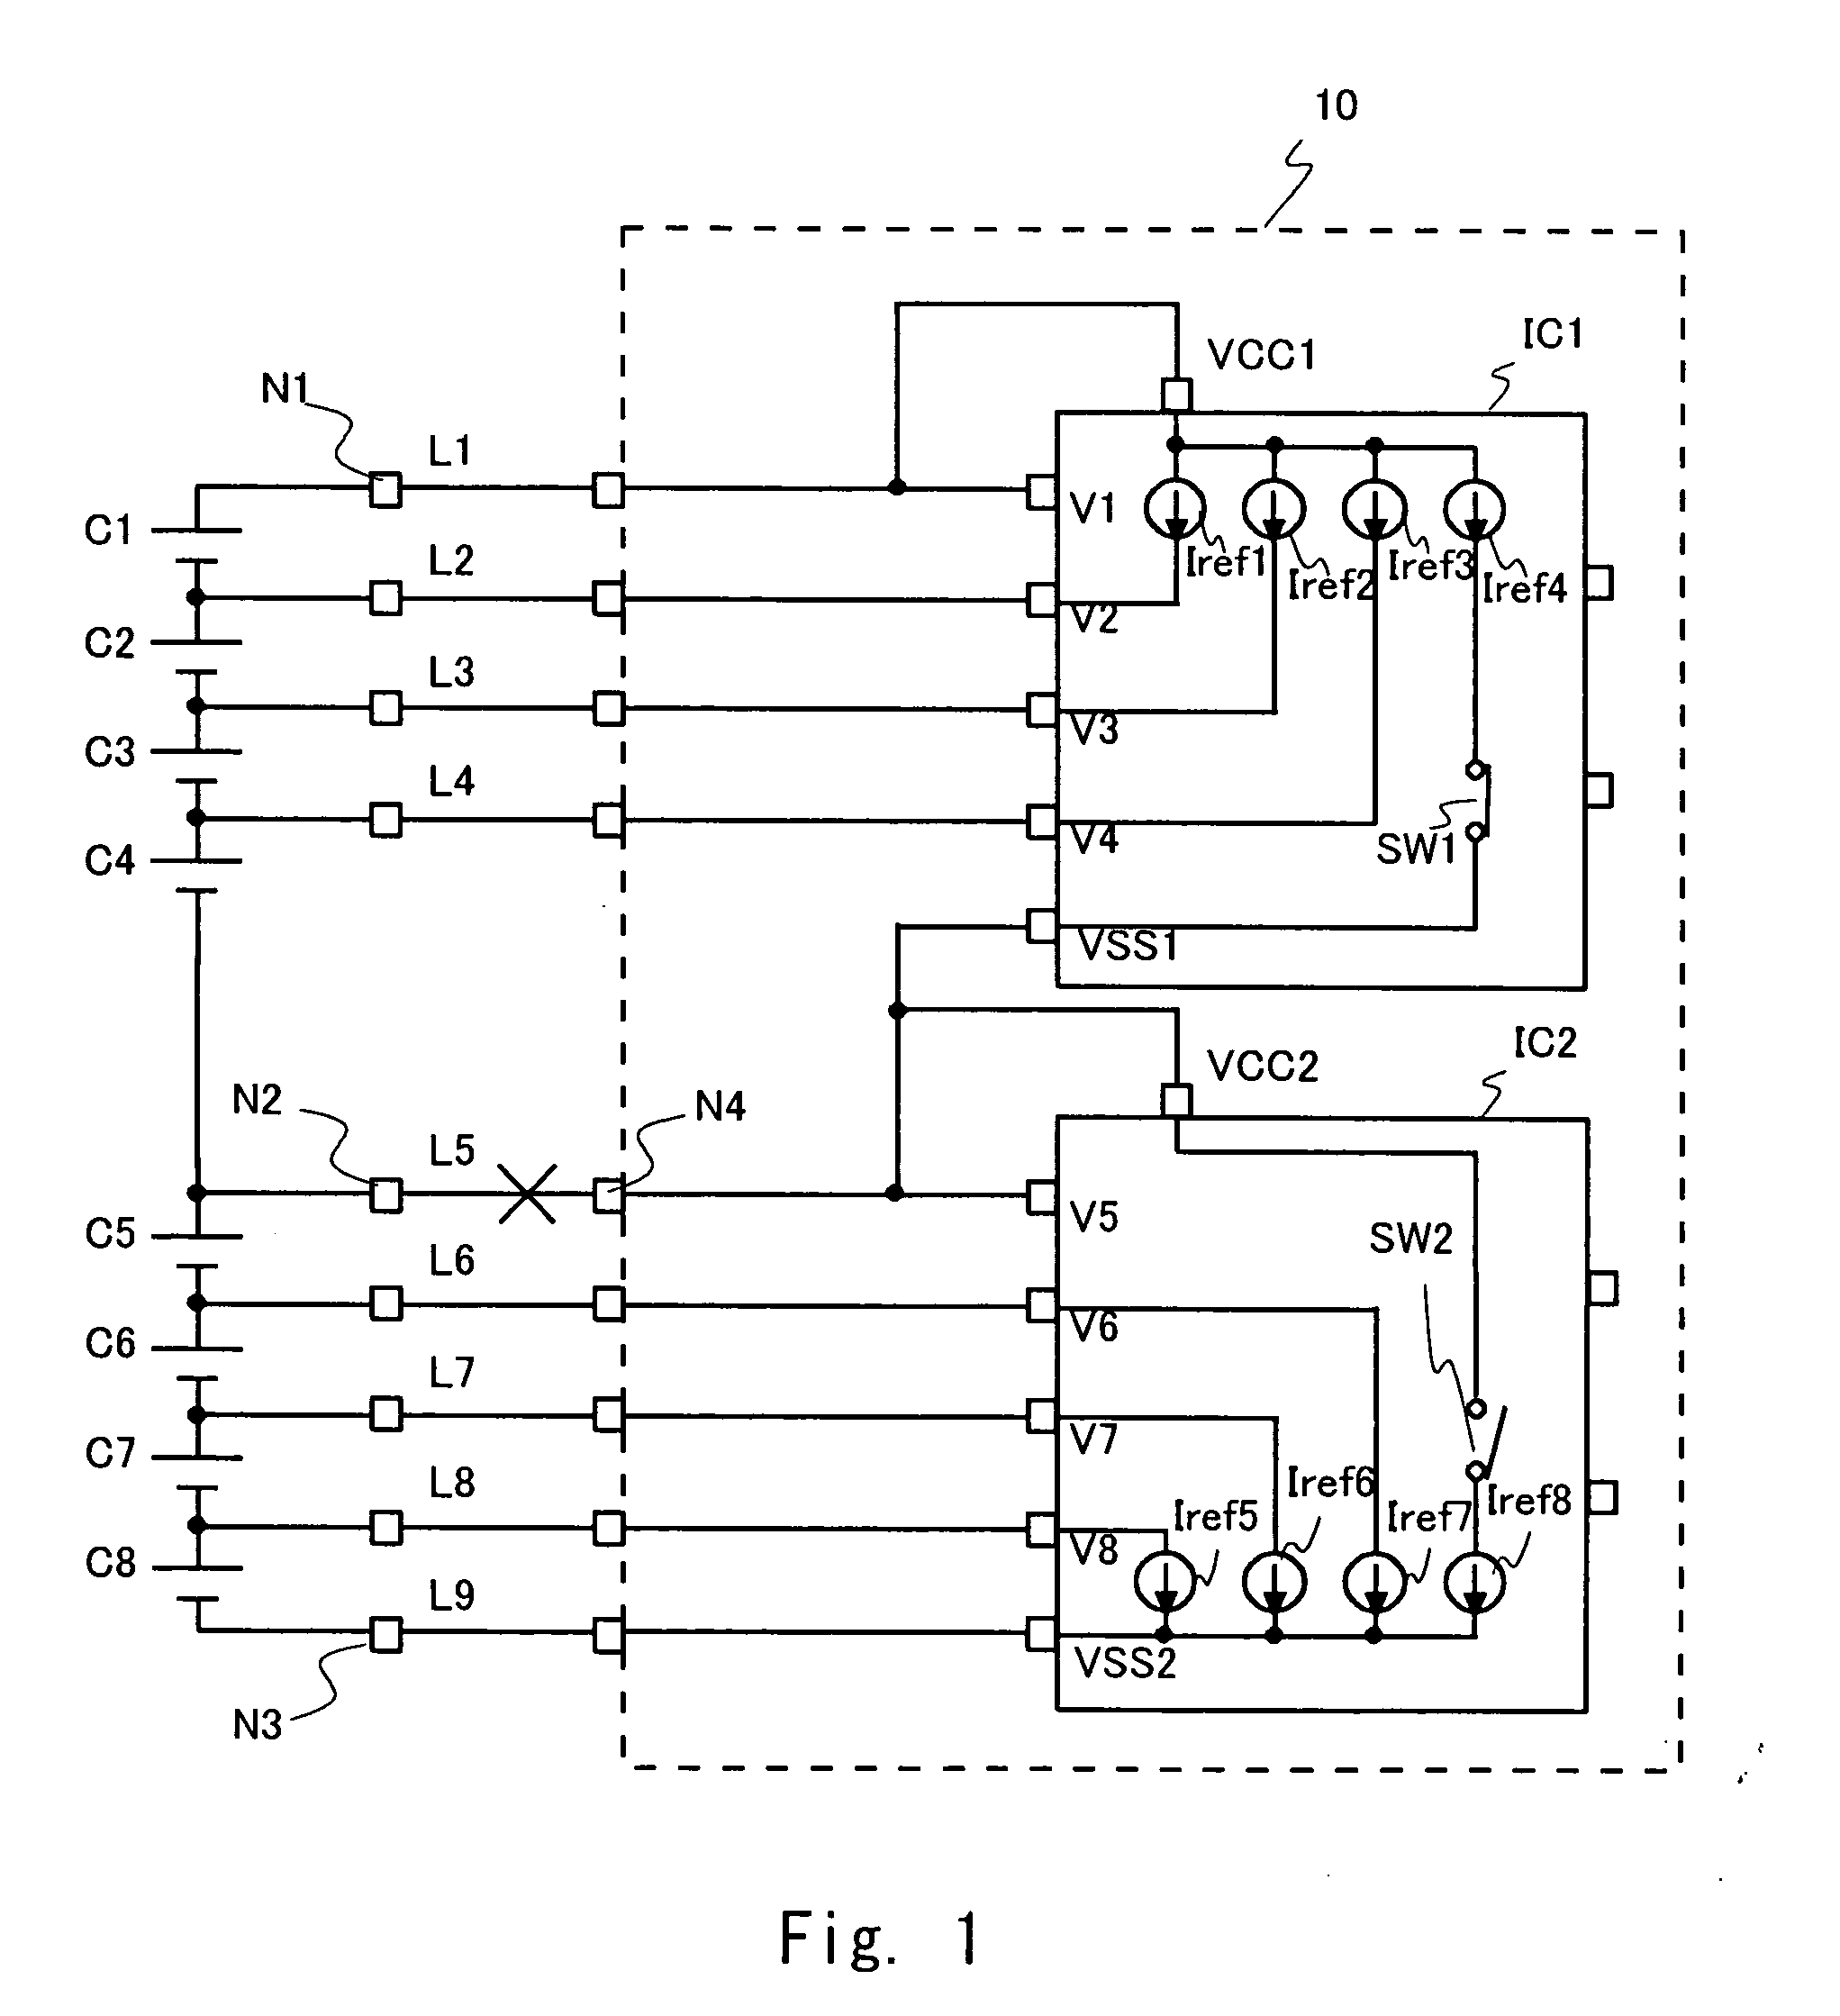 Battery voltage monitoring apparatus